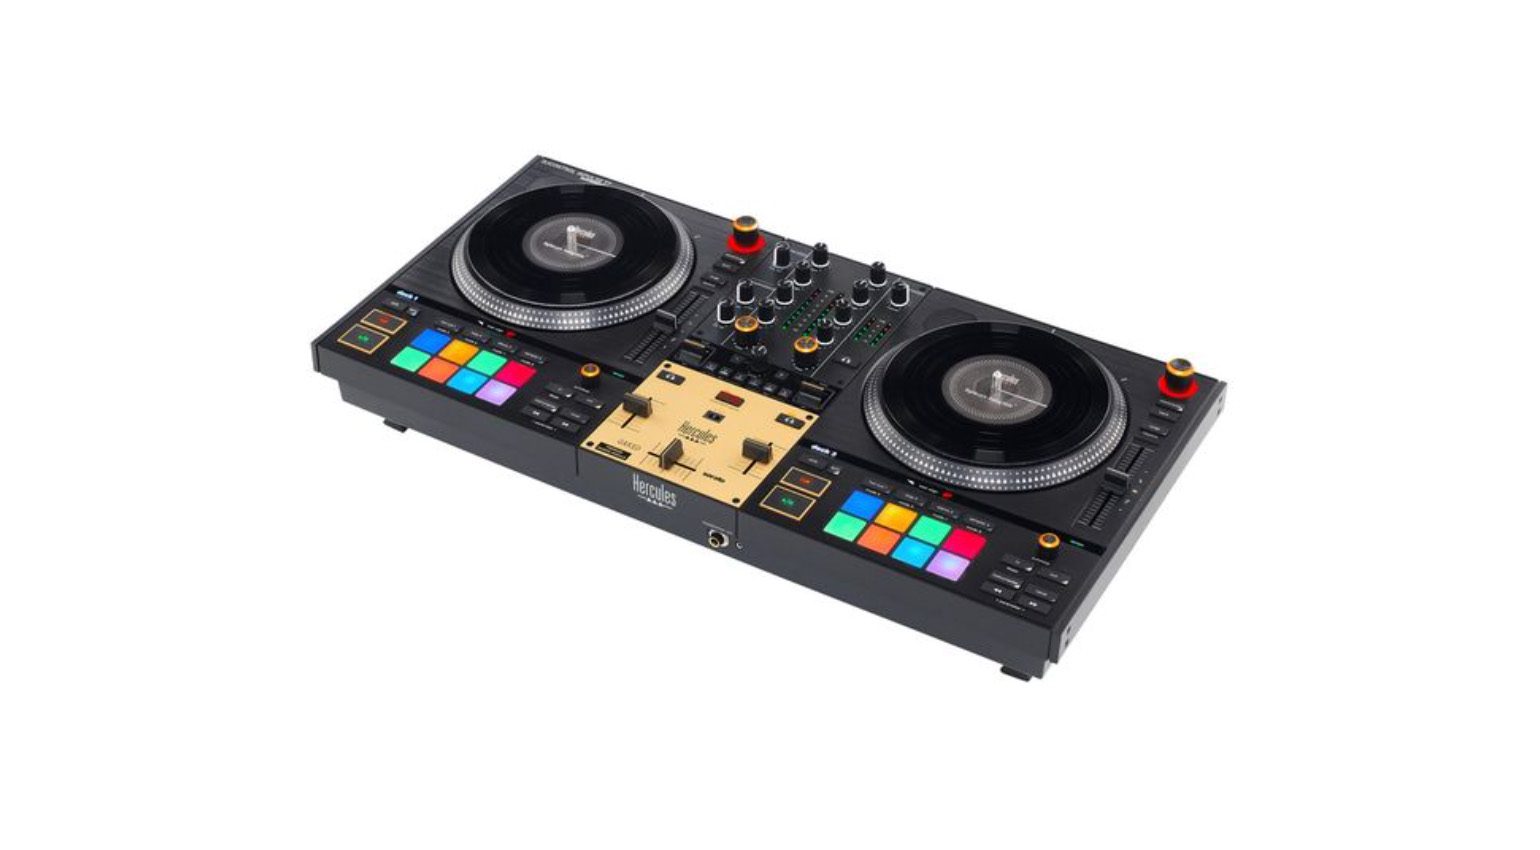 Hercules DJ Control Inpulse T7 Premium